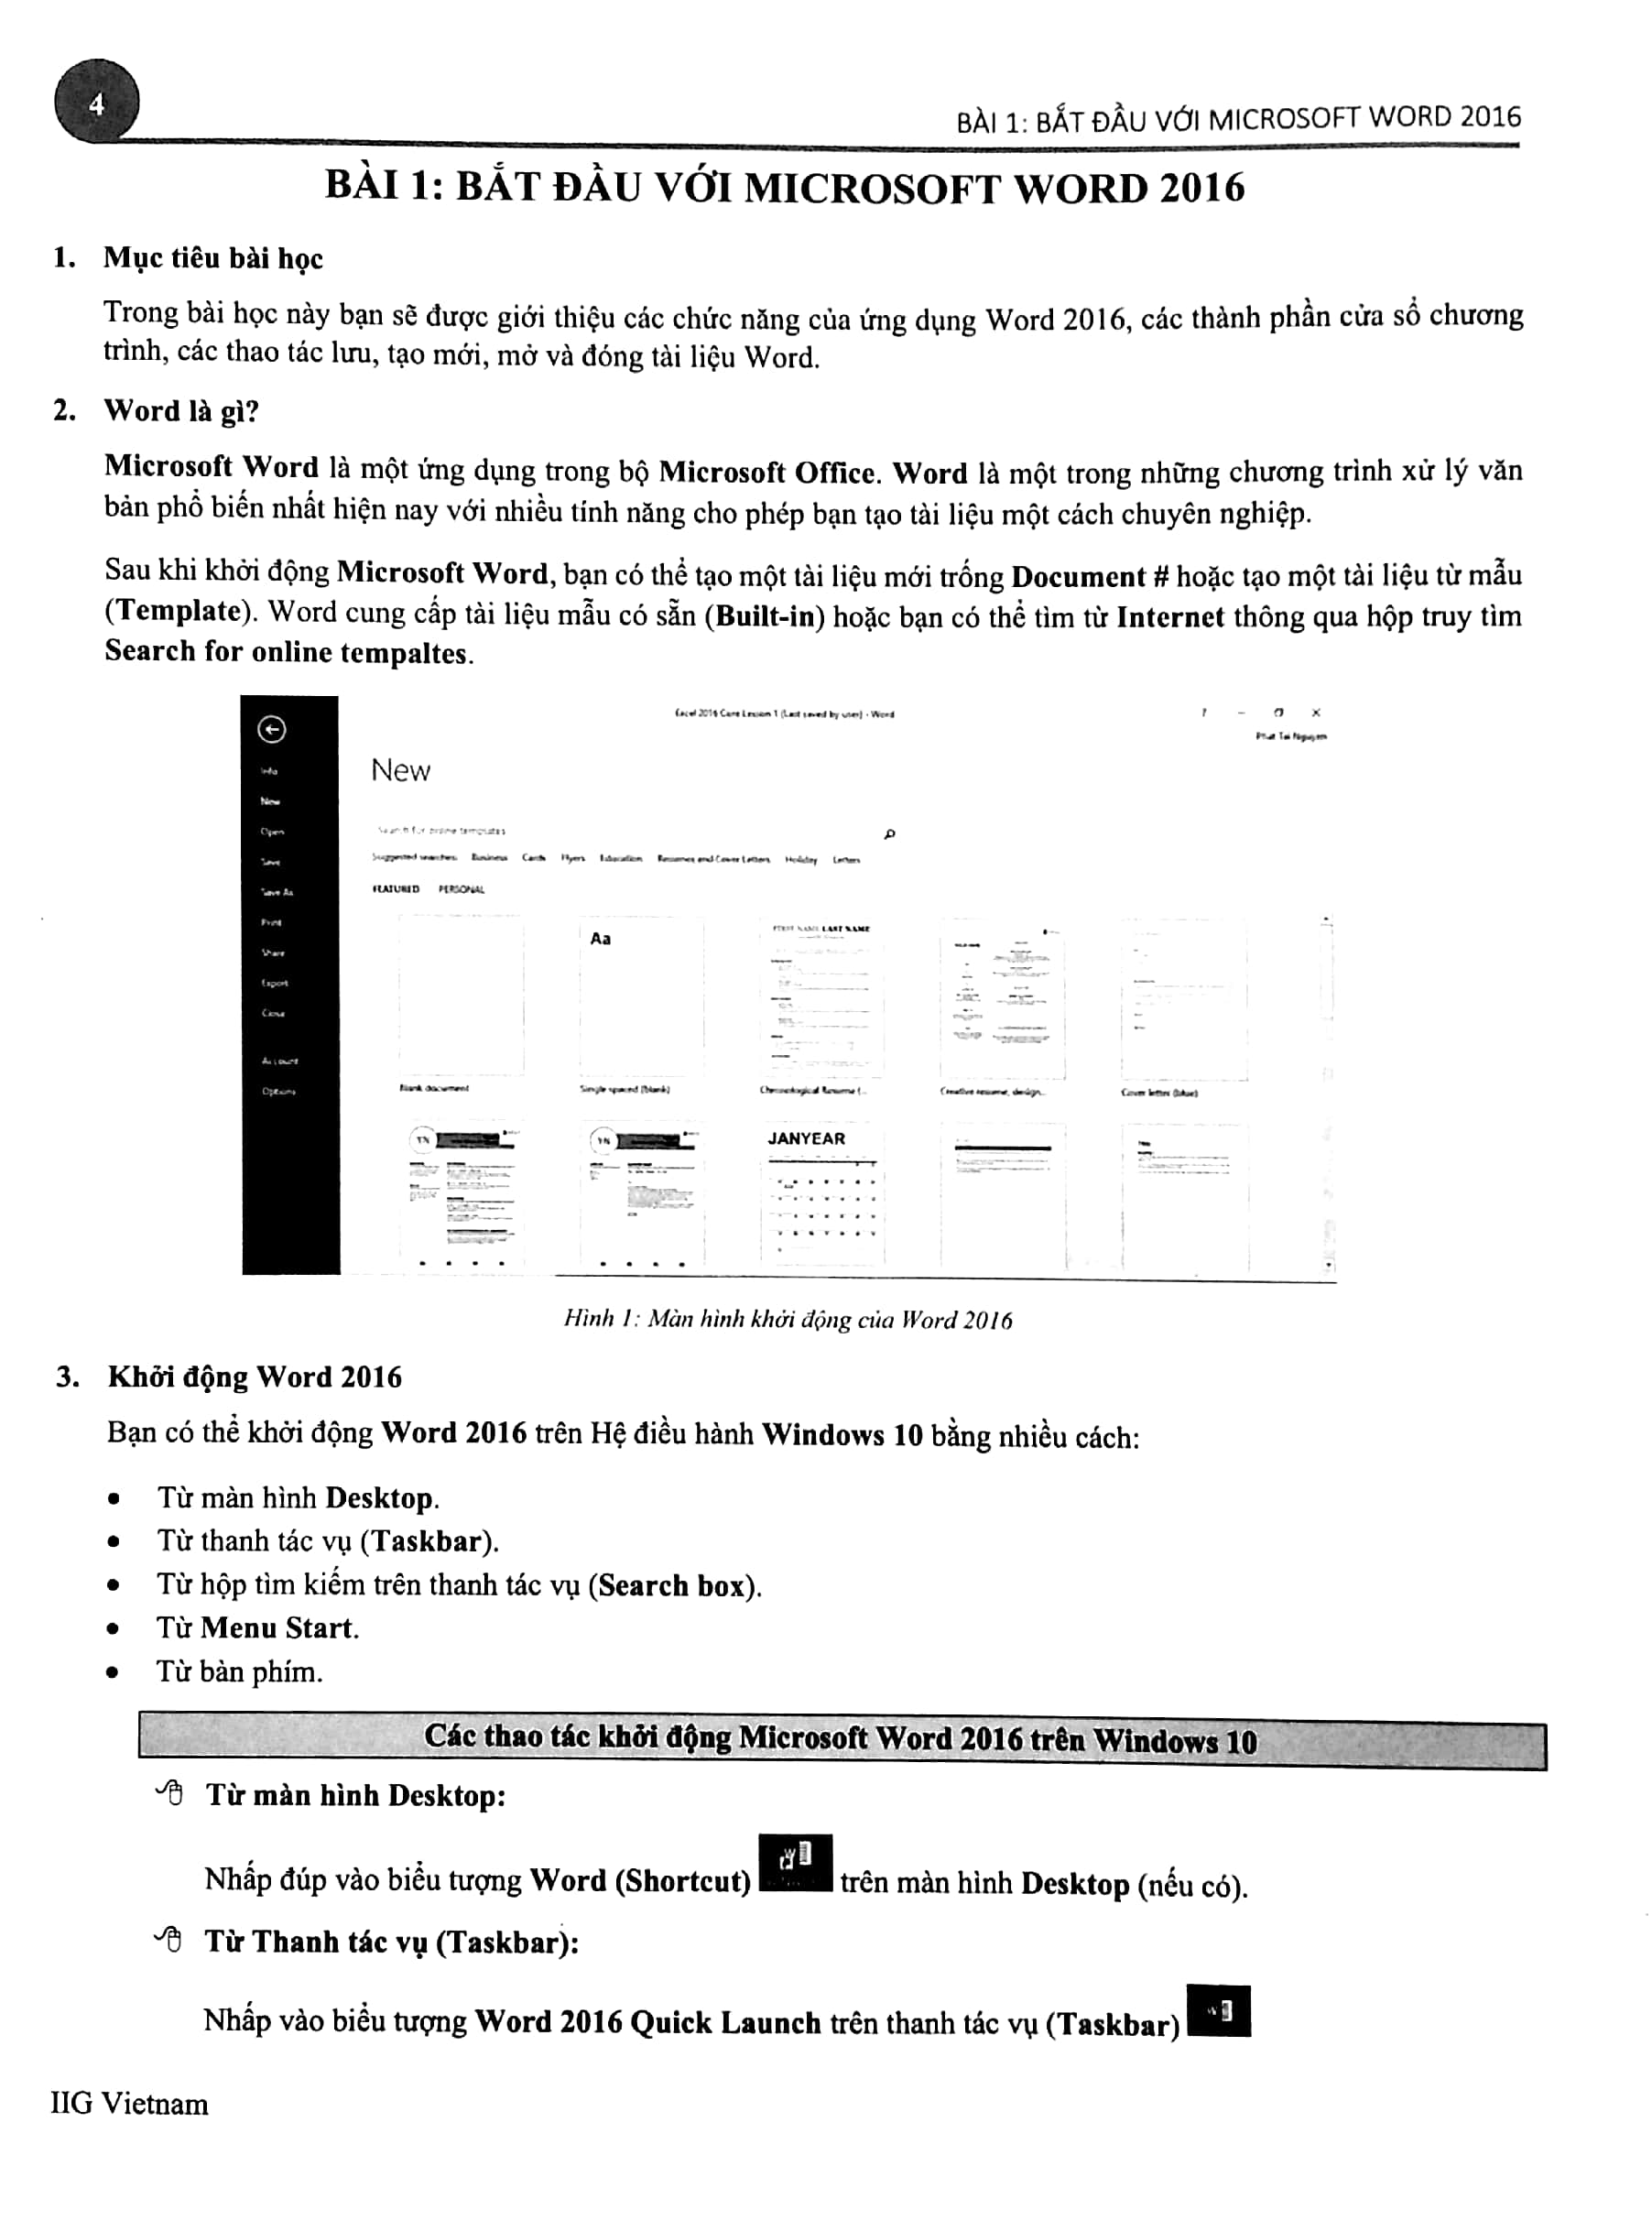 Microsoft Office Word 2016 PDF